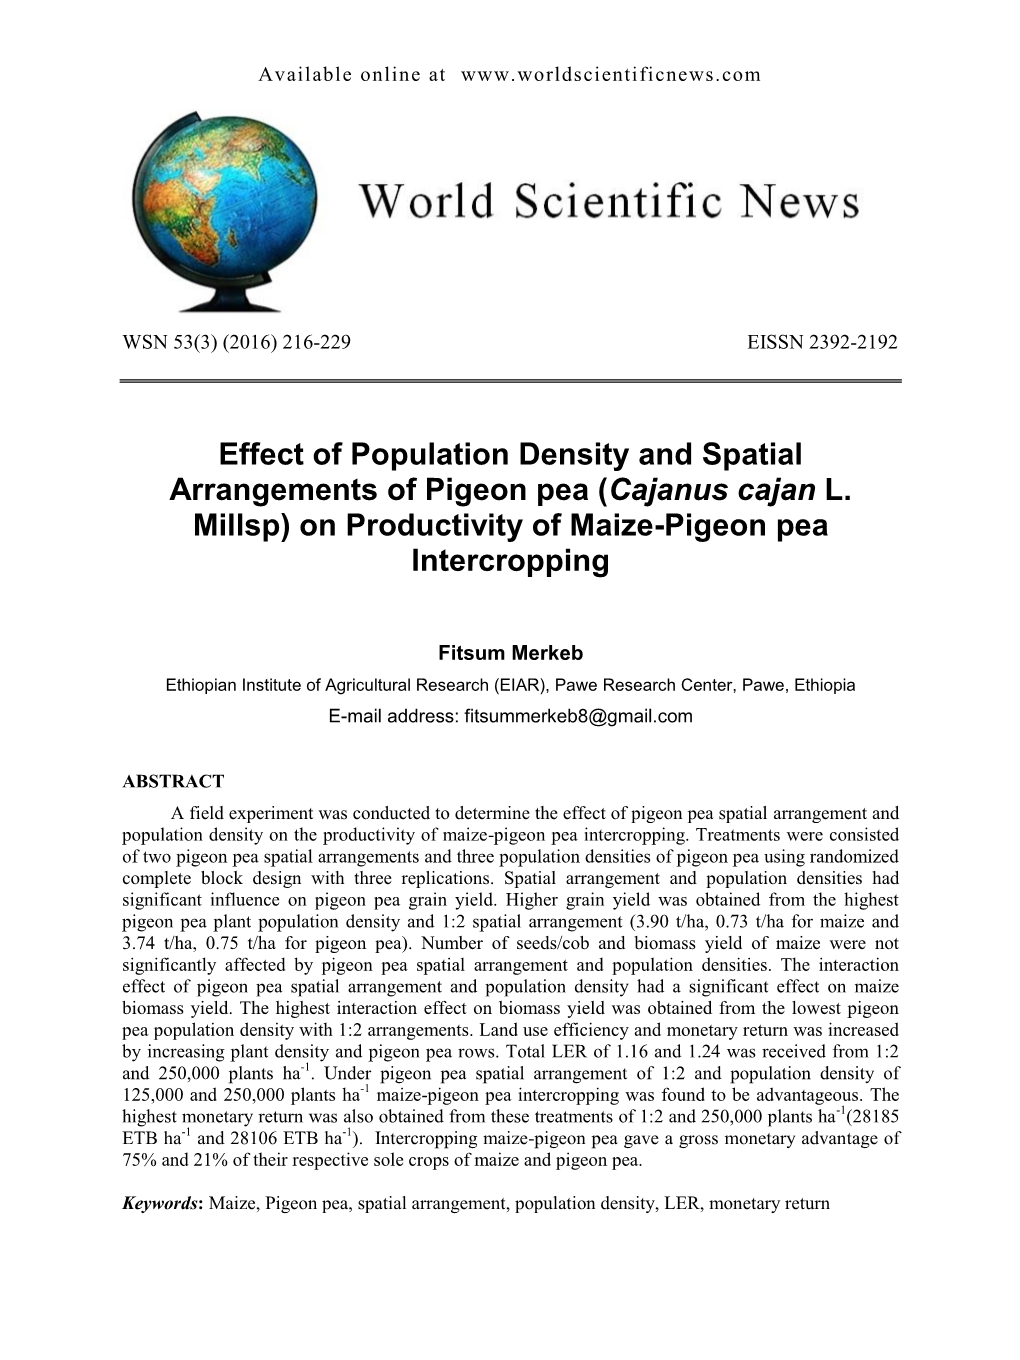 Effect of Population Density and Spatial Arrangements of Pigeon Pea (Cajanus Cajan L